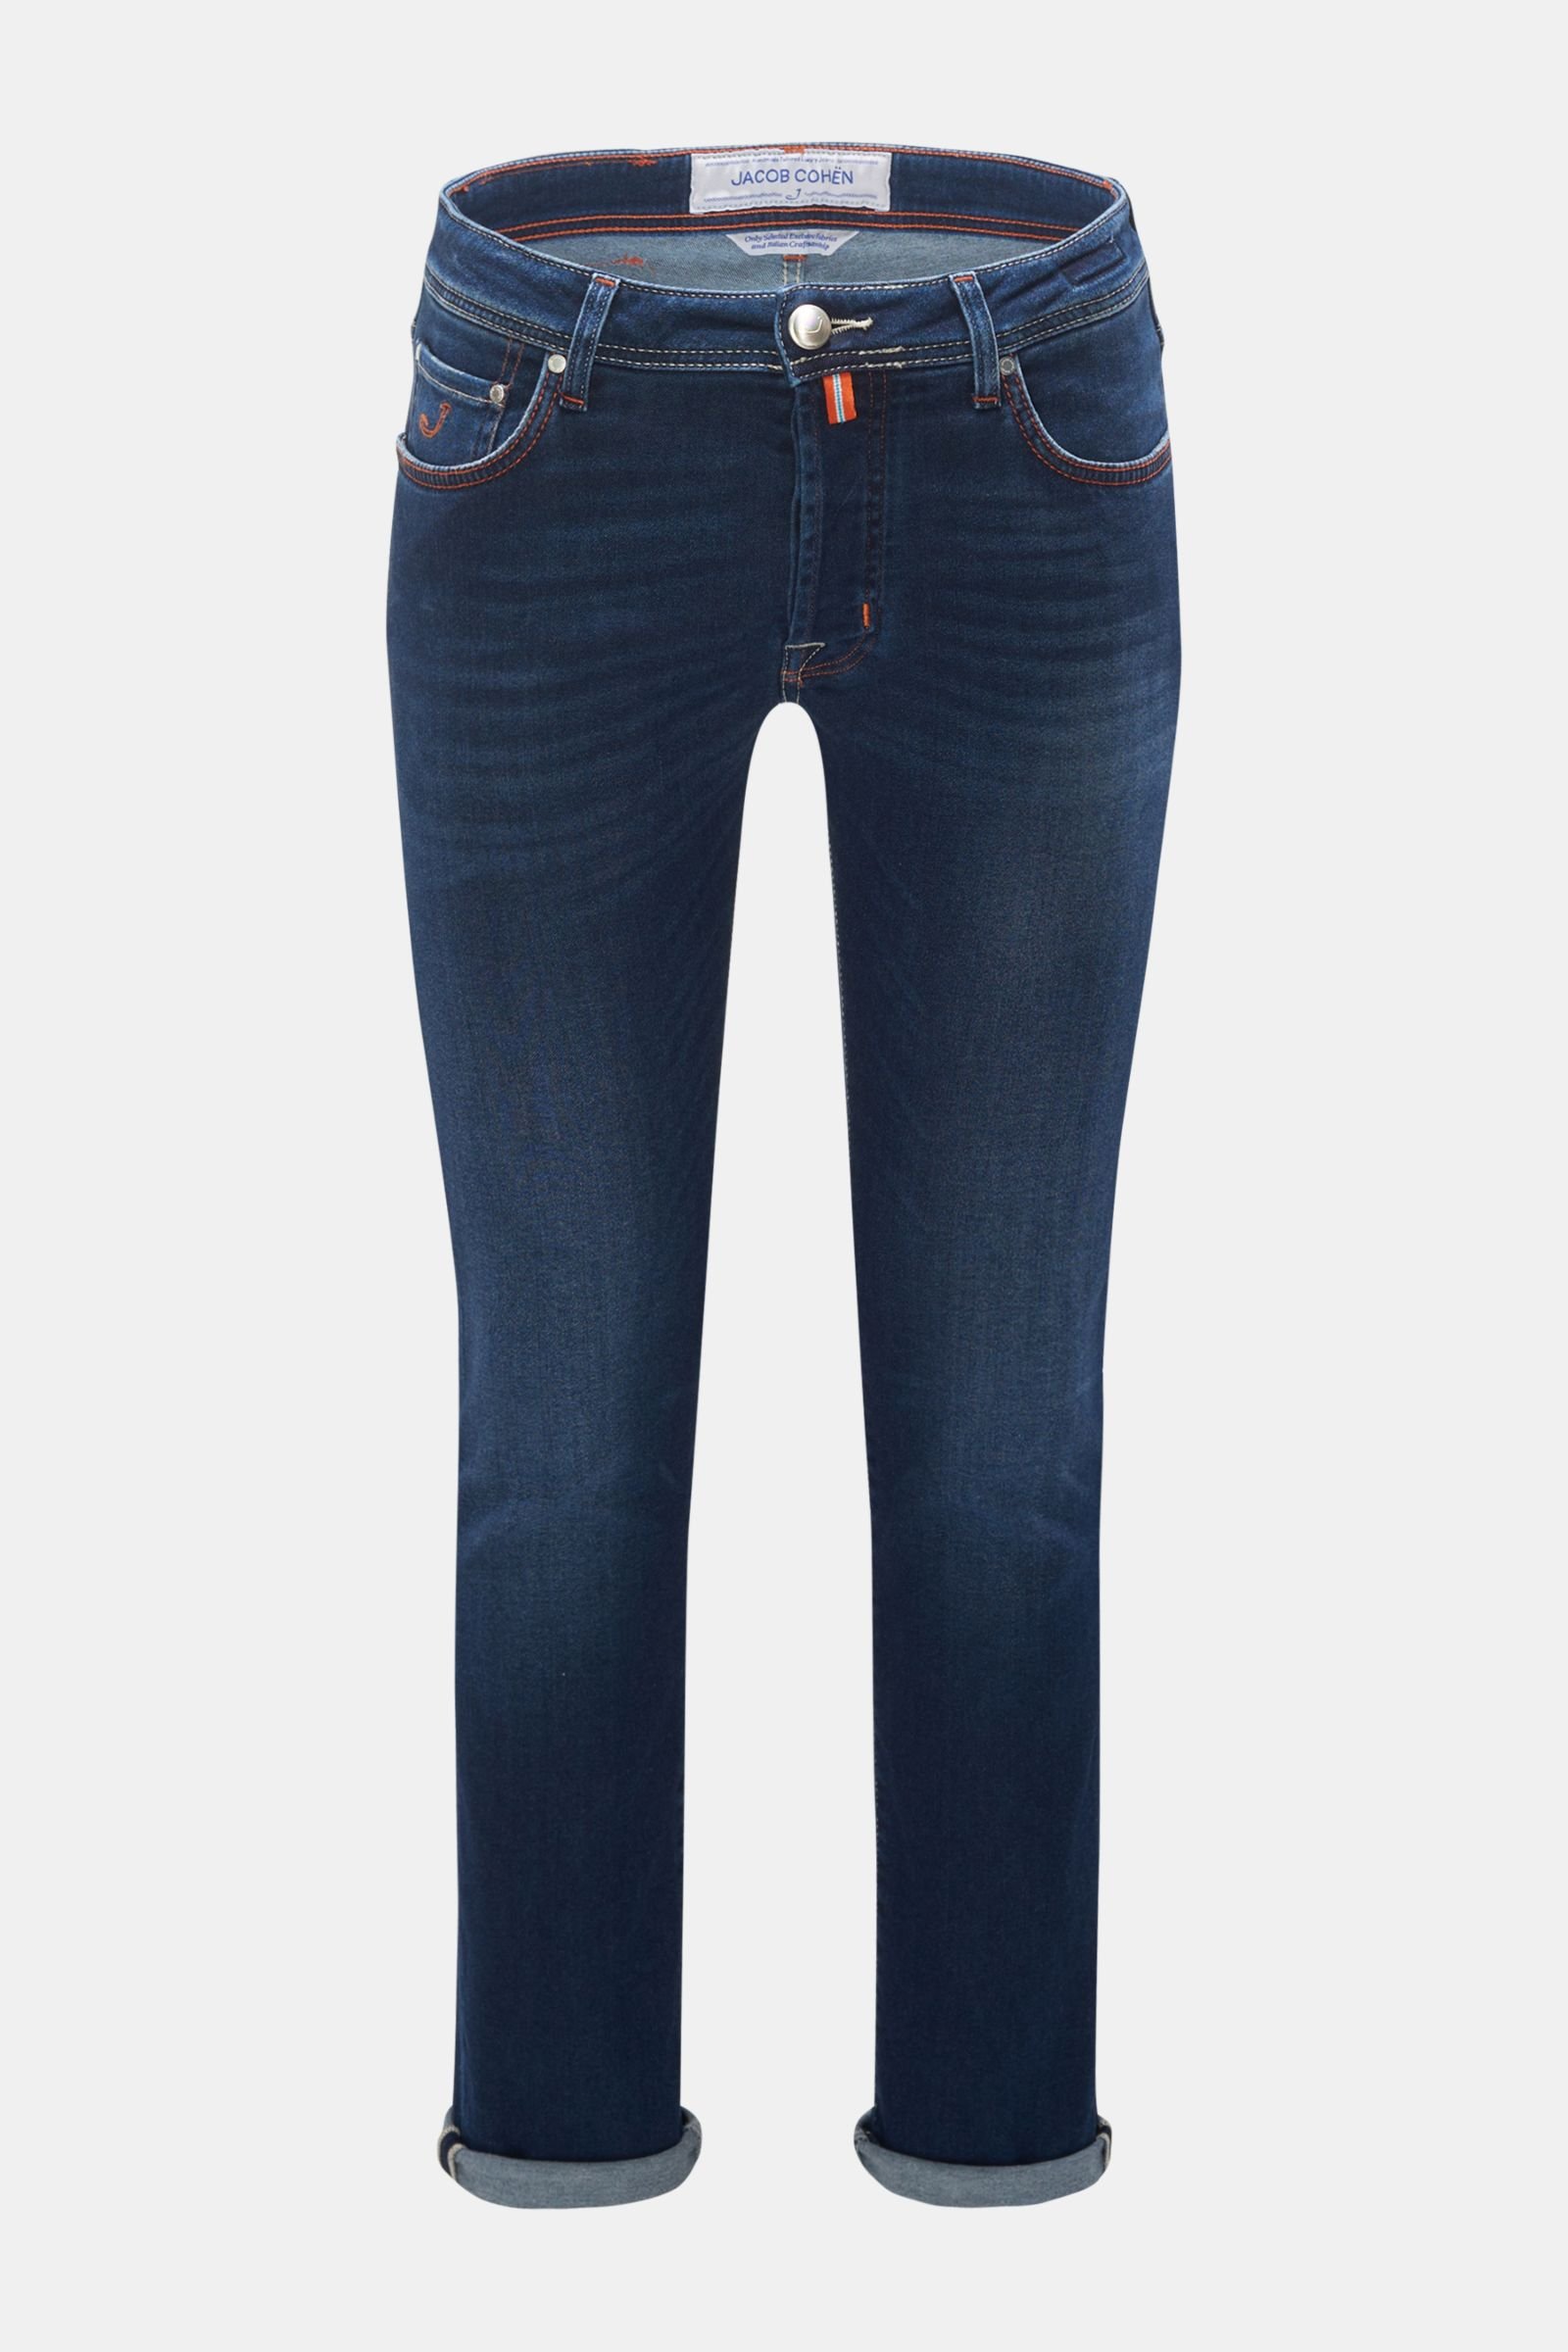 Jeans 'J688 Comfort Extra Slim Fit' navy